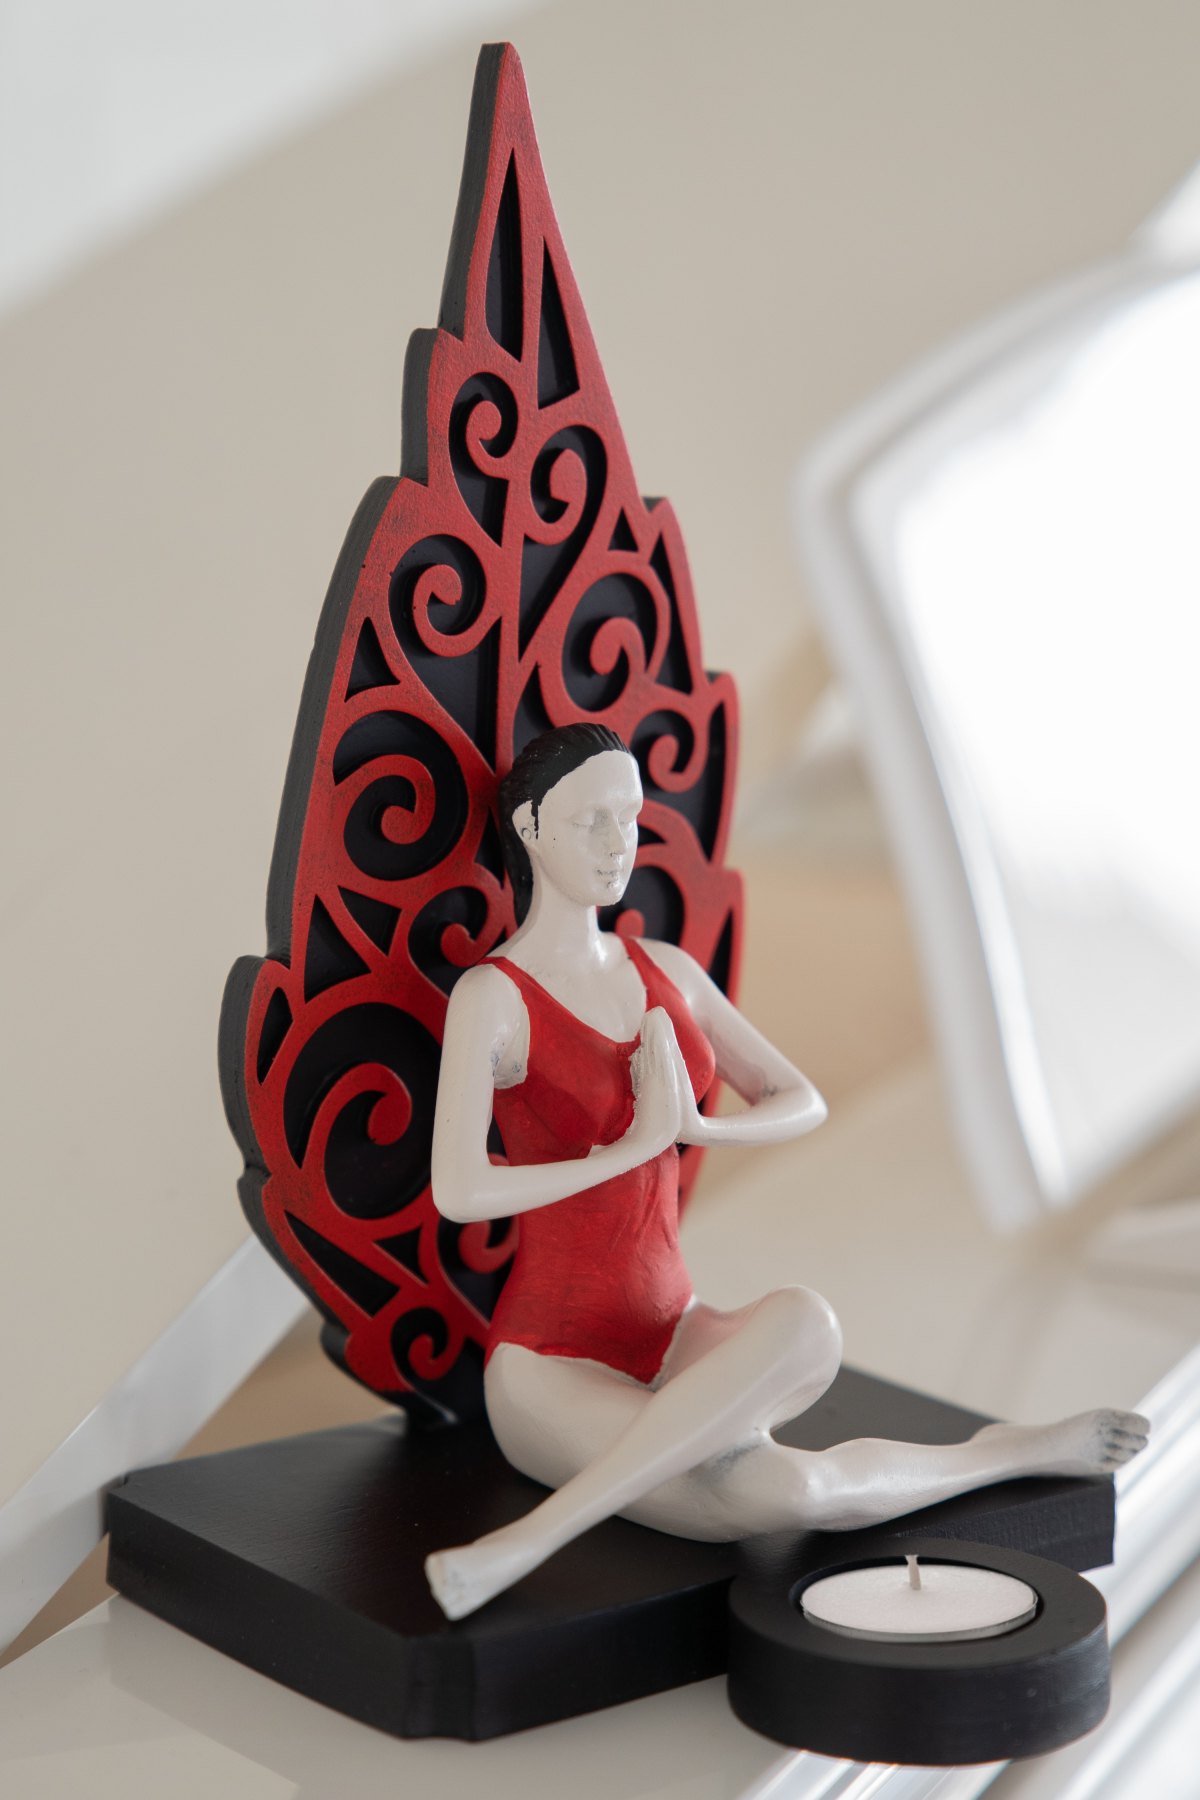 Decorative red leaf yoga figurine